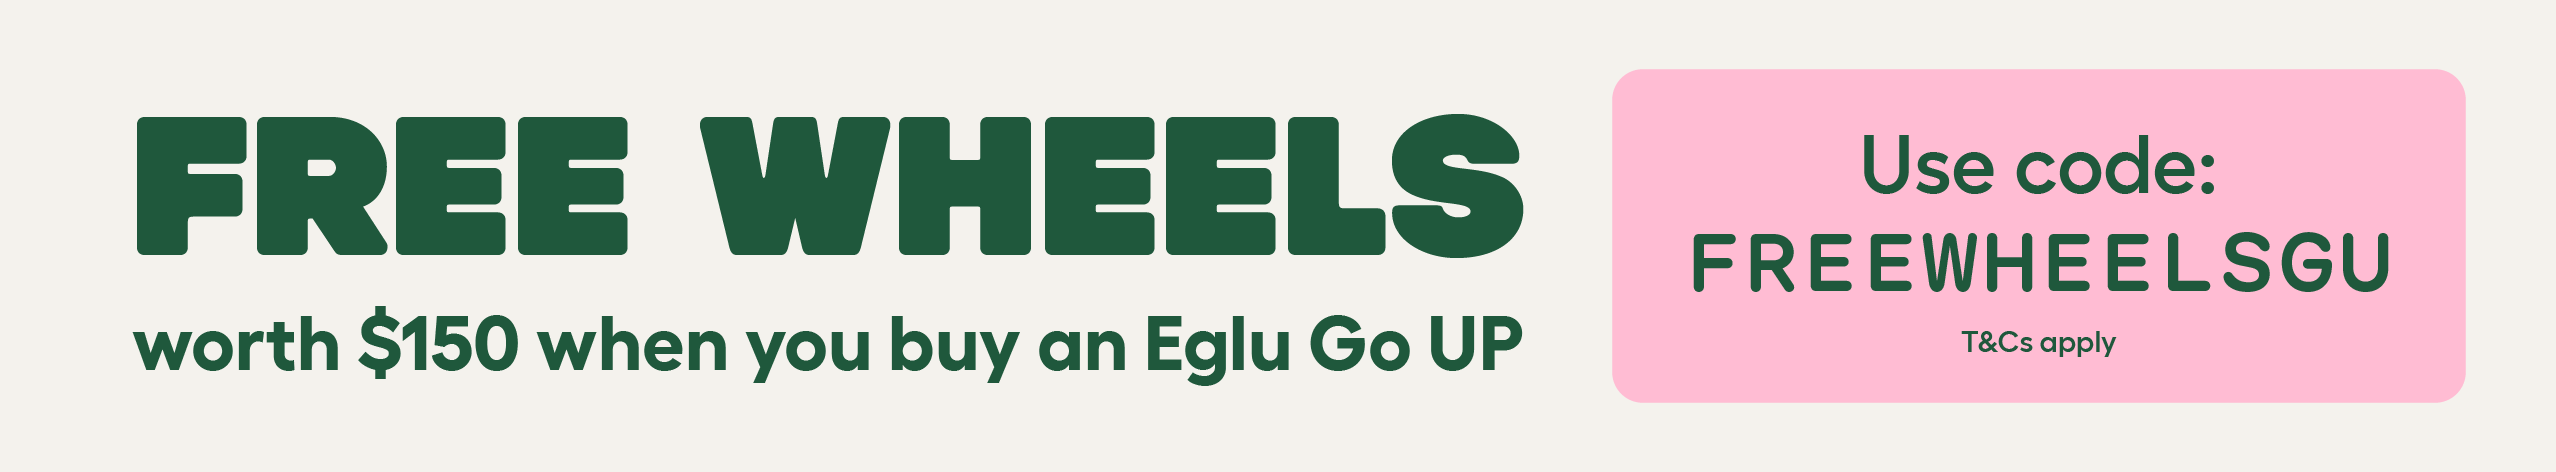 Free wheels when you buy an Eglu Go Up